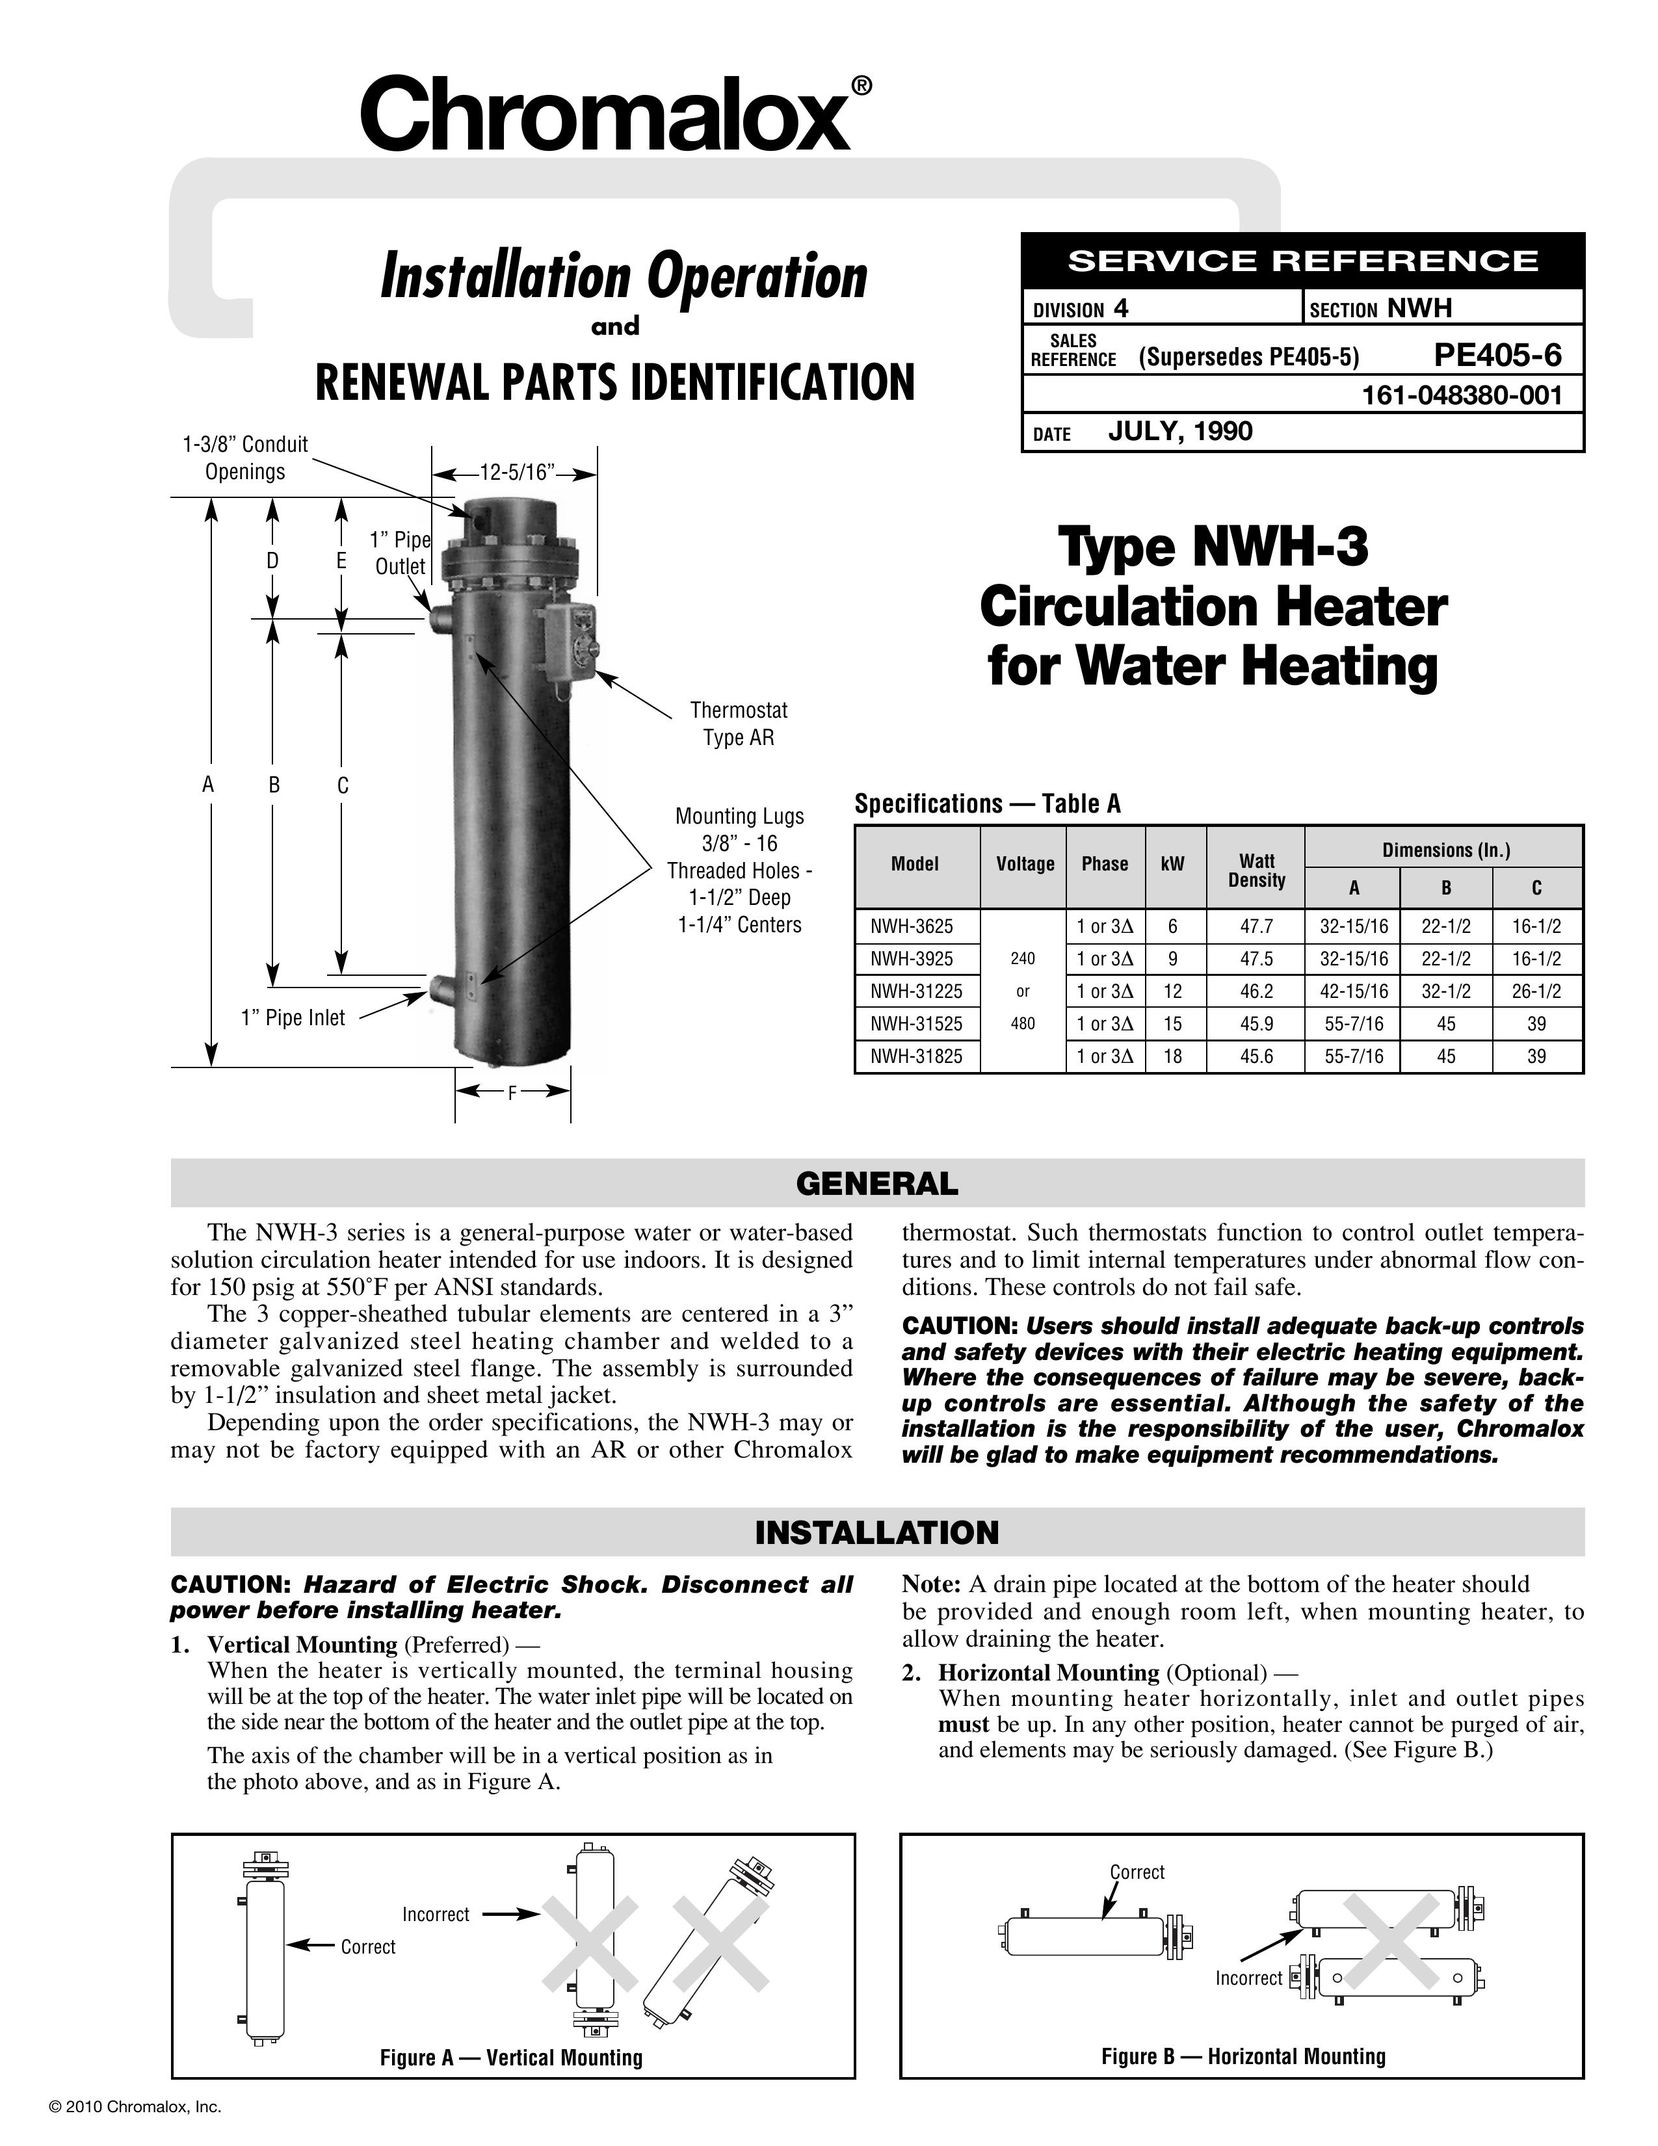 Chromalox NWH-31825 Water Heater User Manual